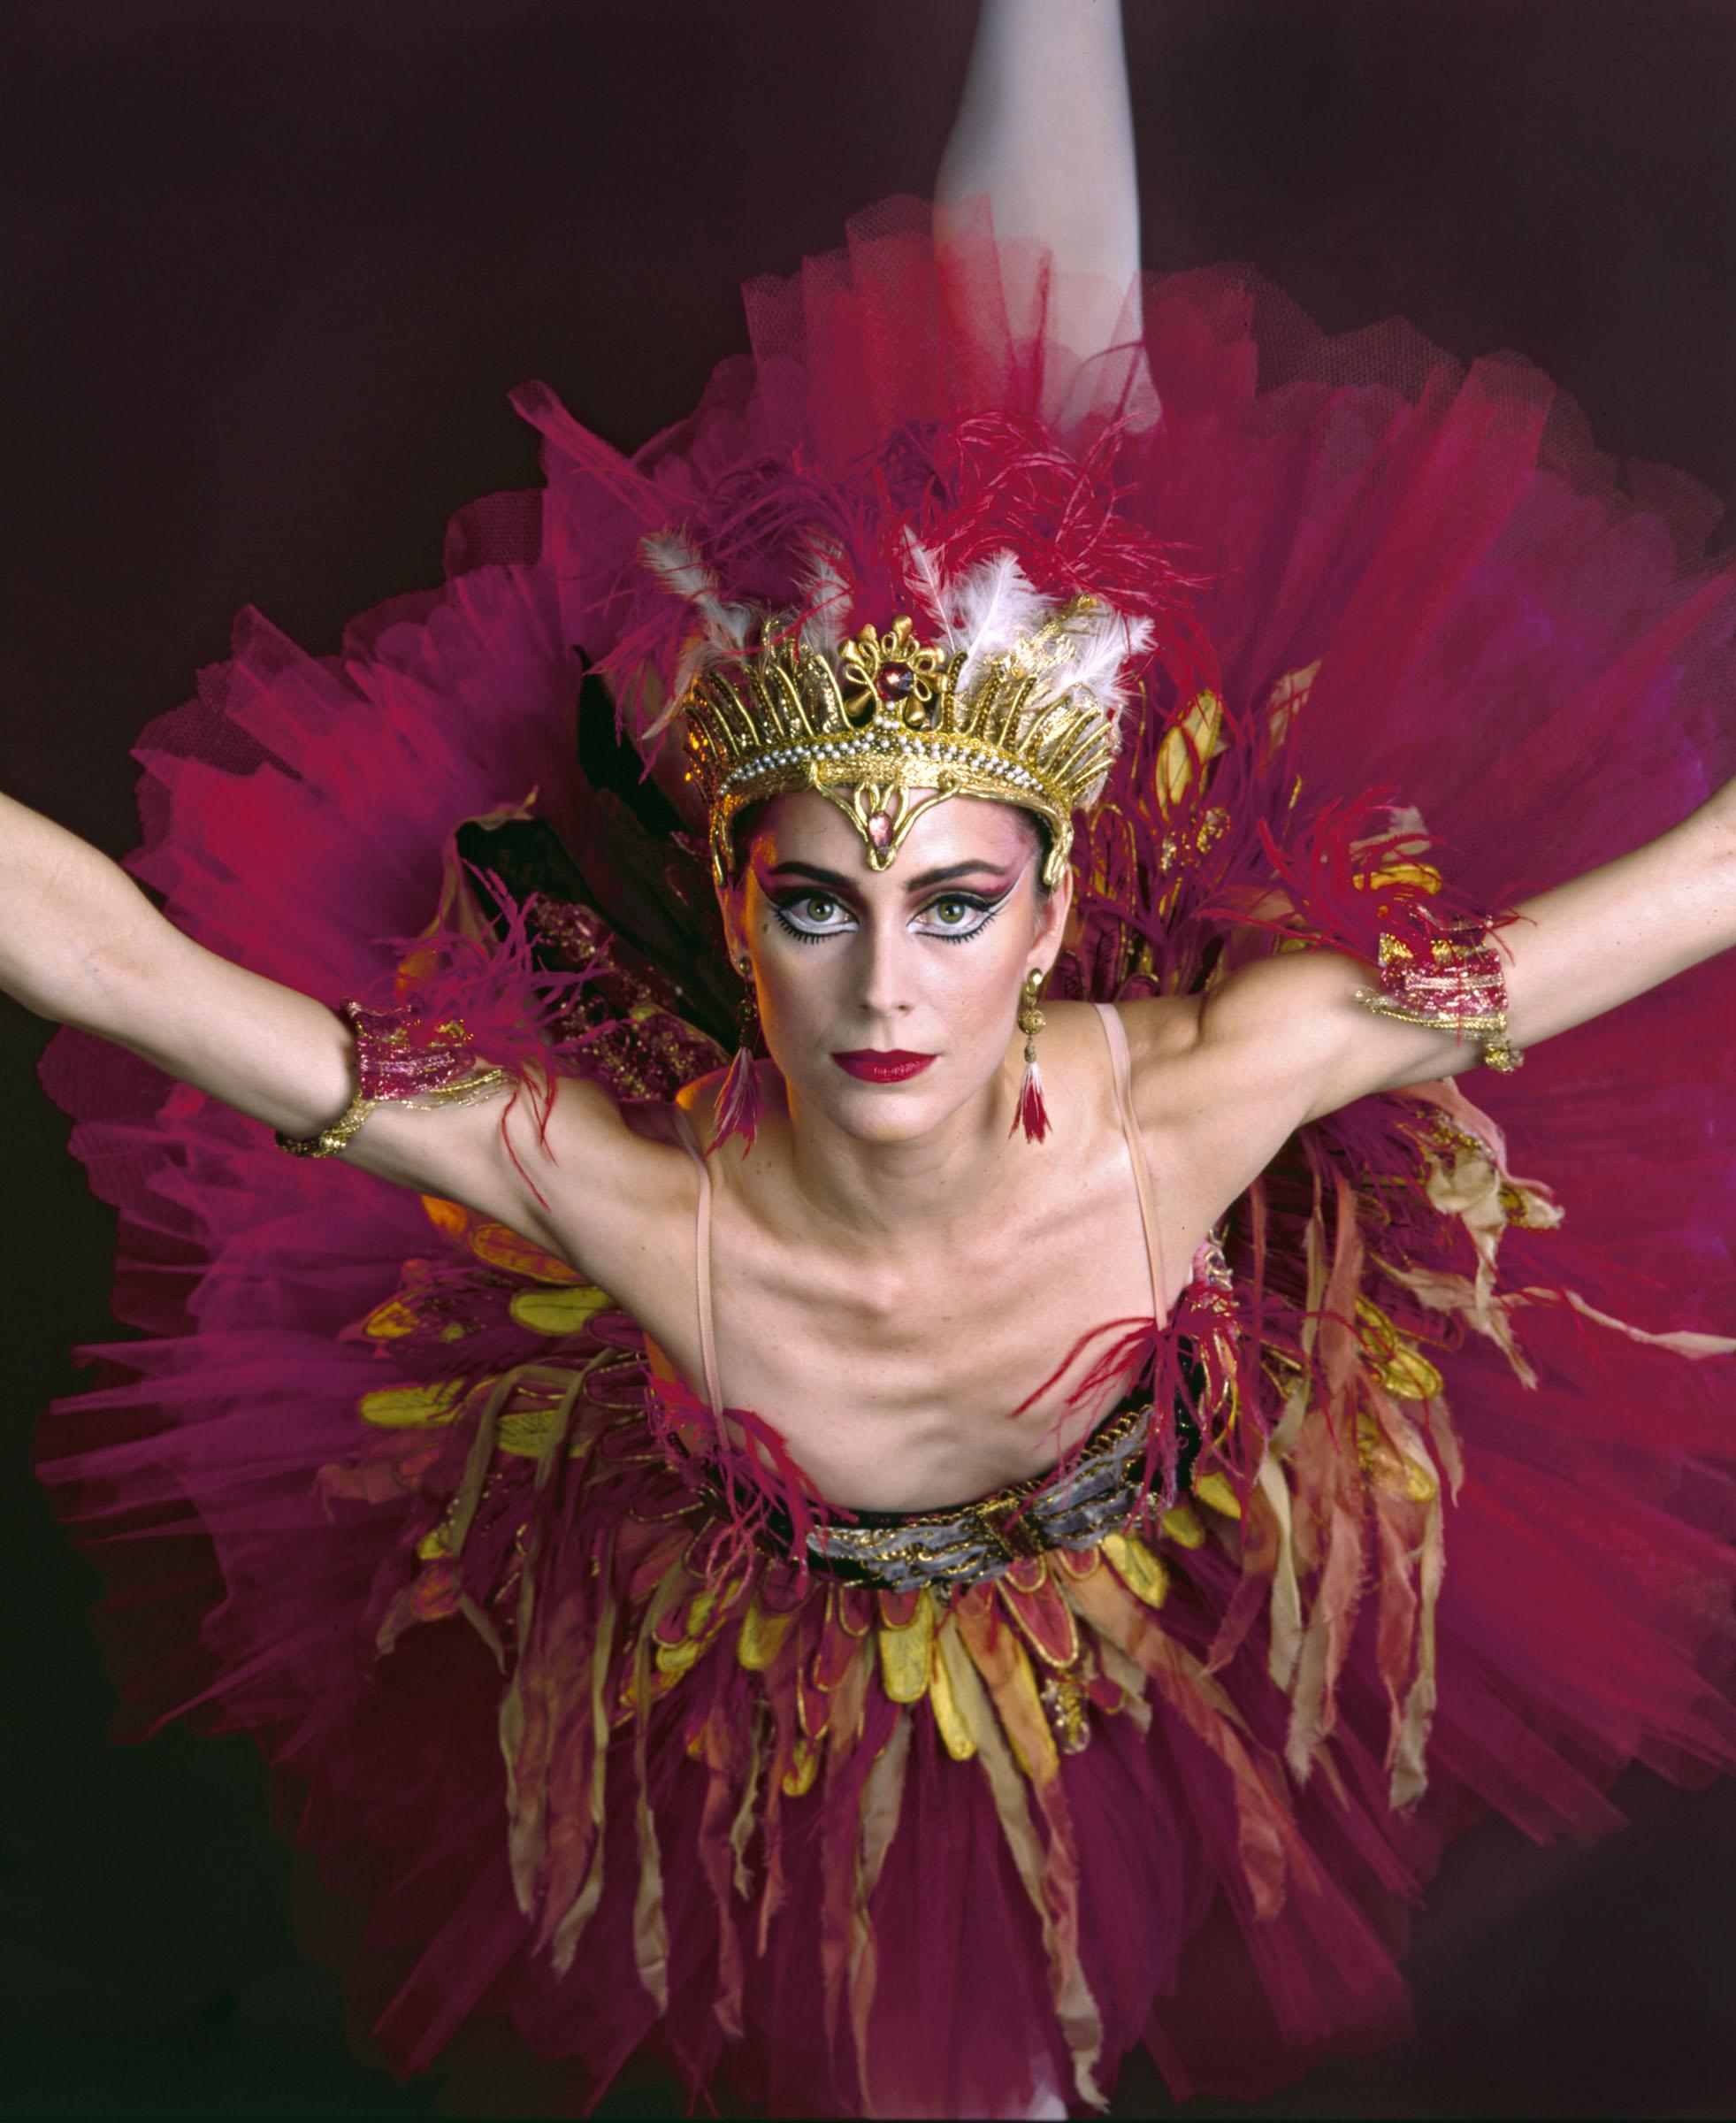 Jack Mitchell Color Photograph - American Ballet Theatre dancer Christine Dunham in 'The Firebird' 17 x 22"  